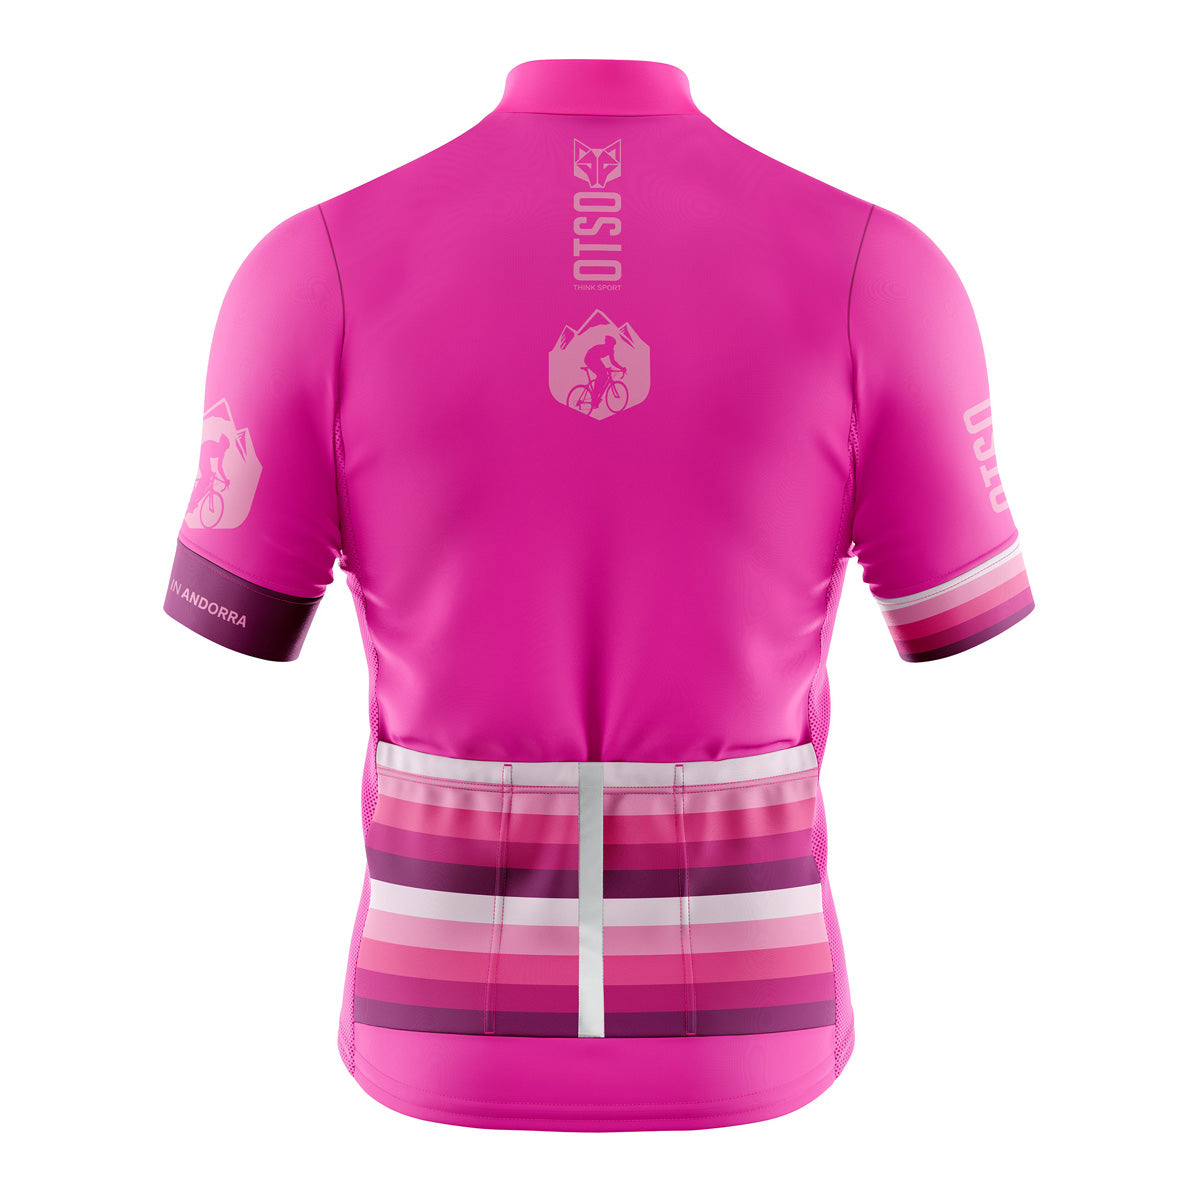 Mallot de ciclisme màniga curta home - Stripes Fluo Pink (Outlet)